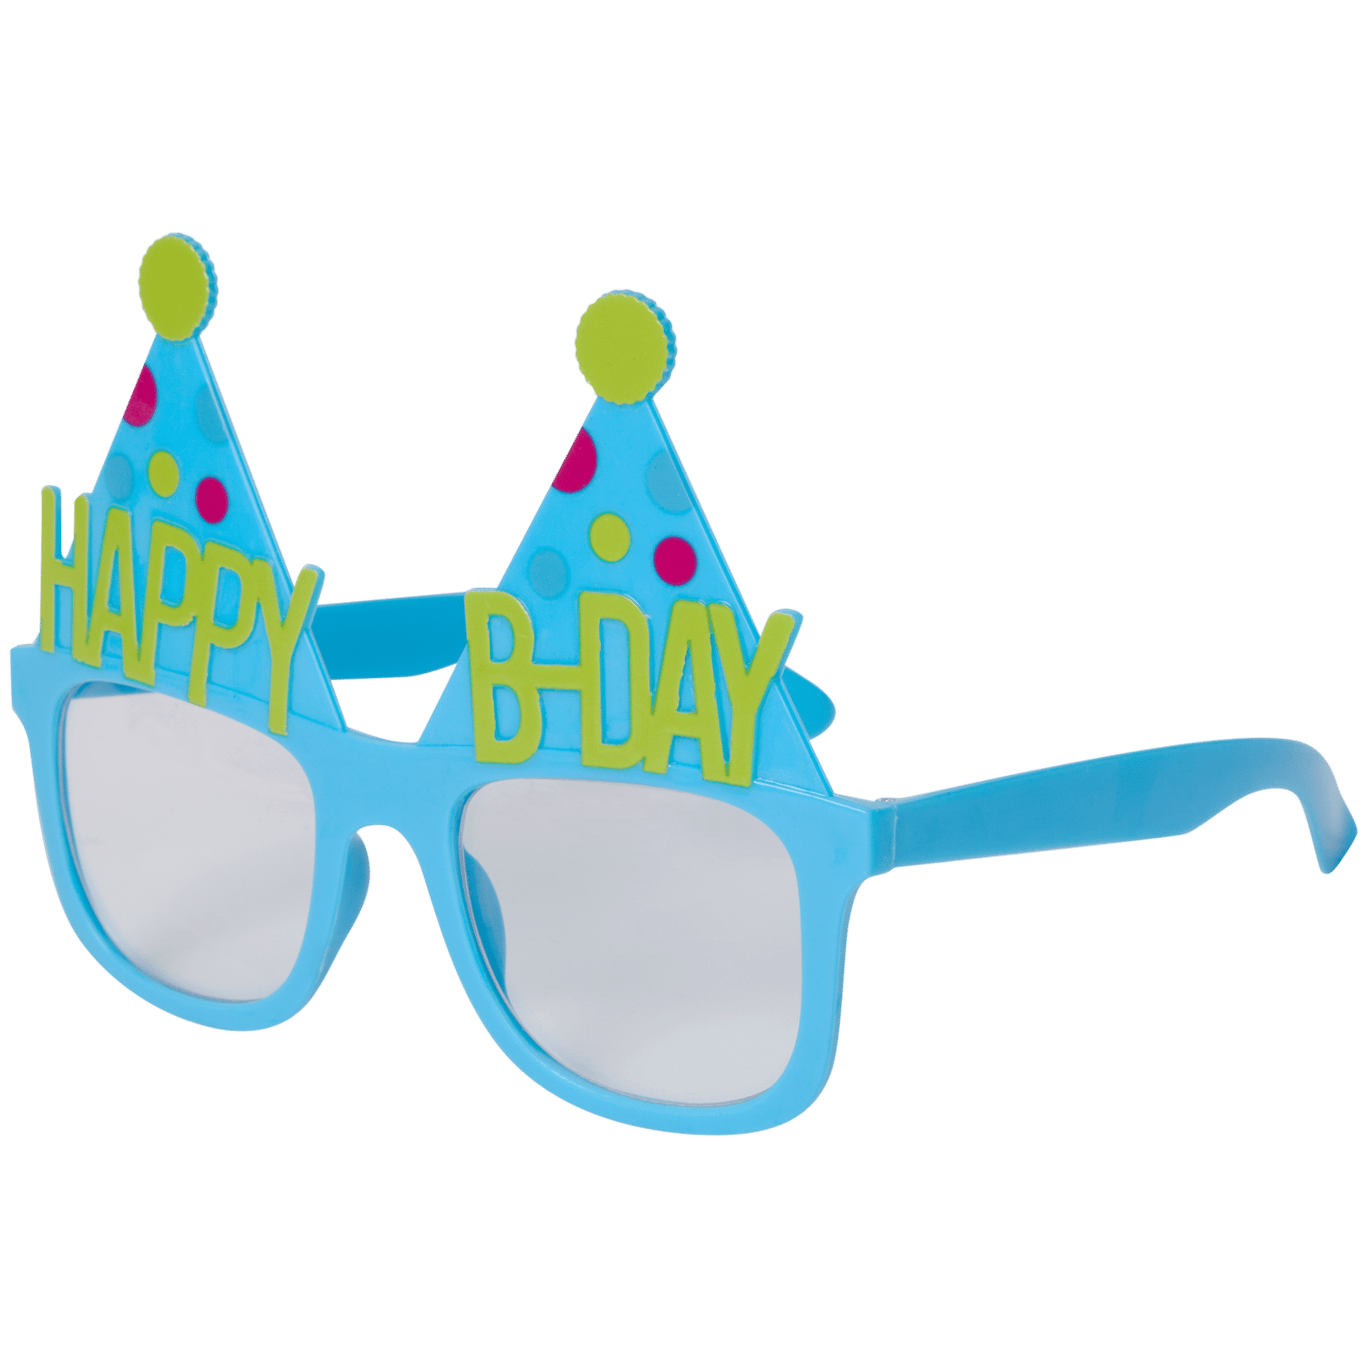 Partybrille Happy Birthday